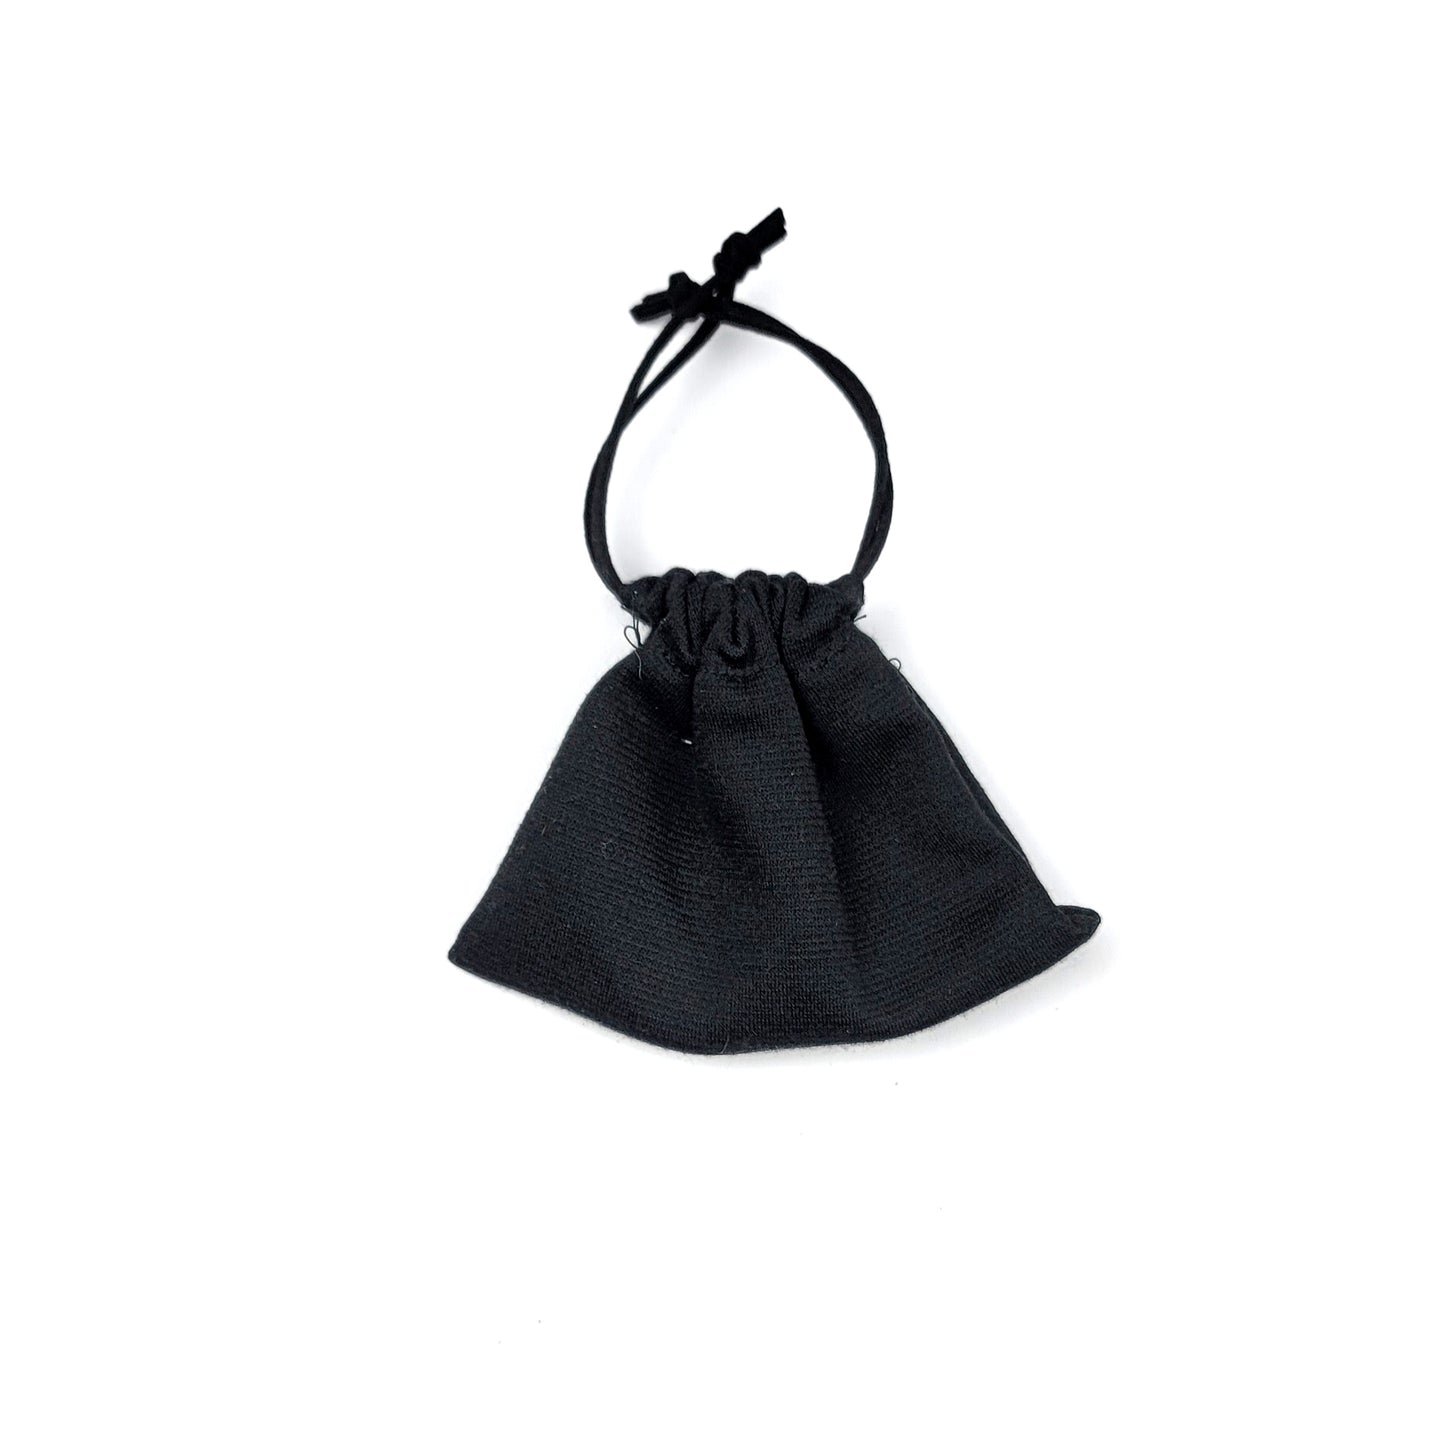 Small Black Drawstring Bag